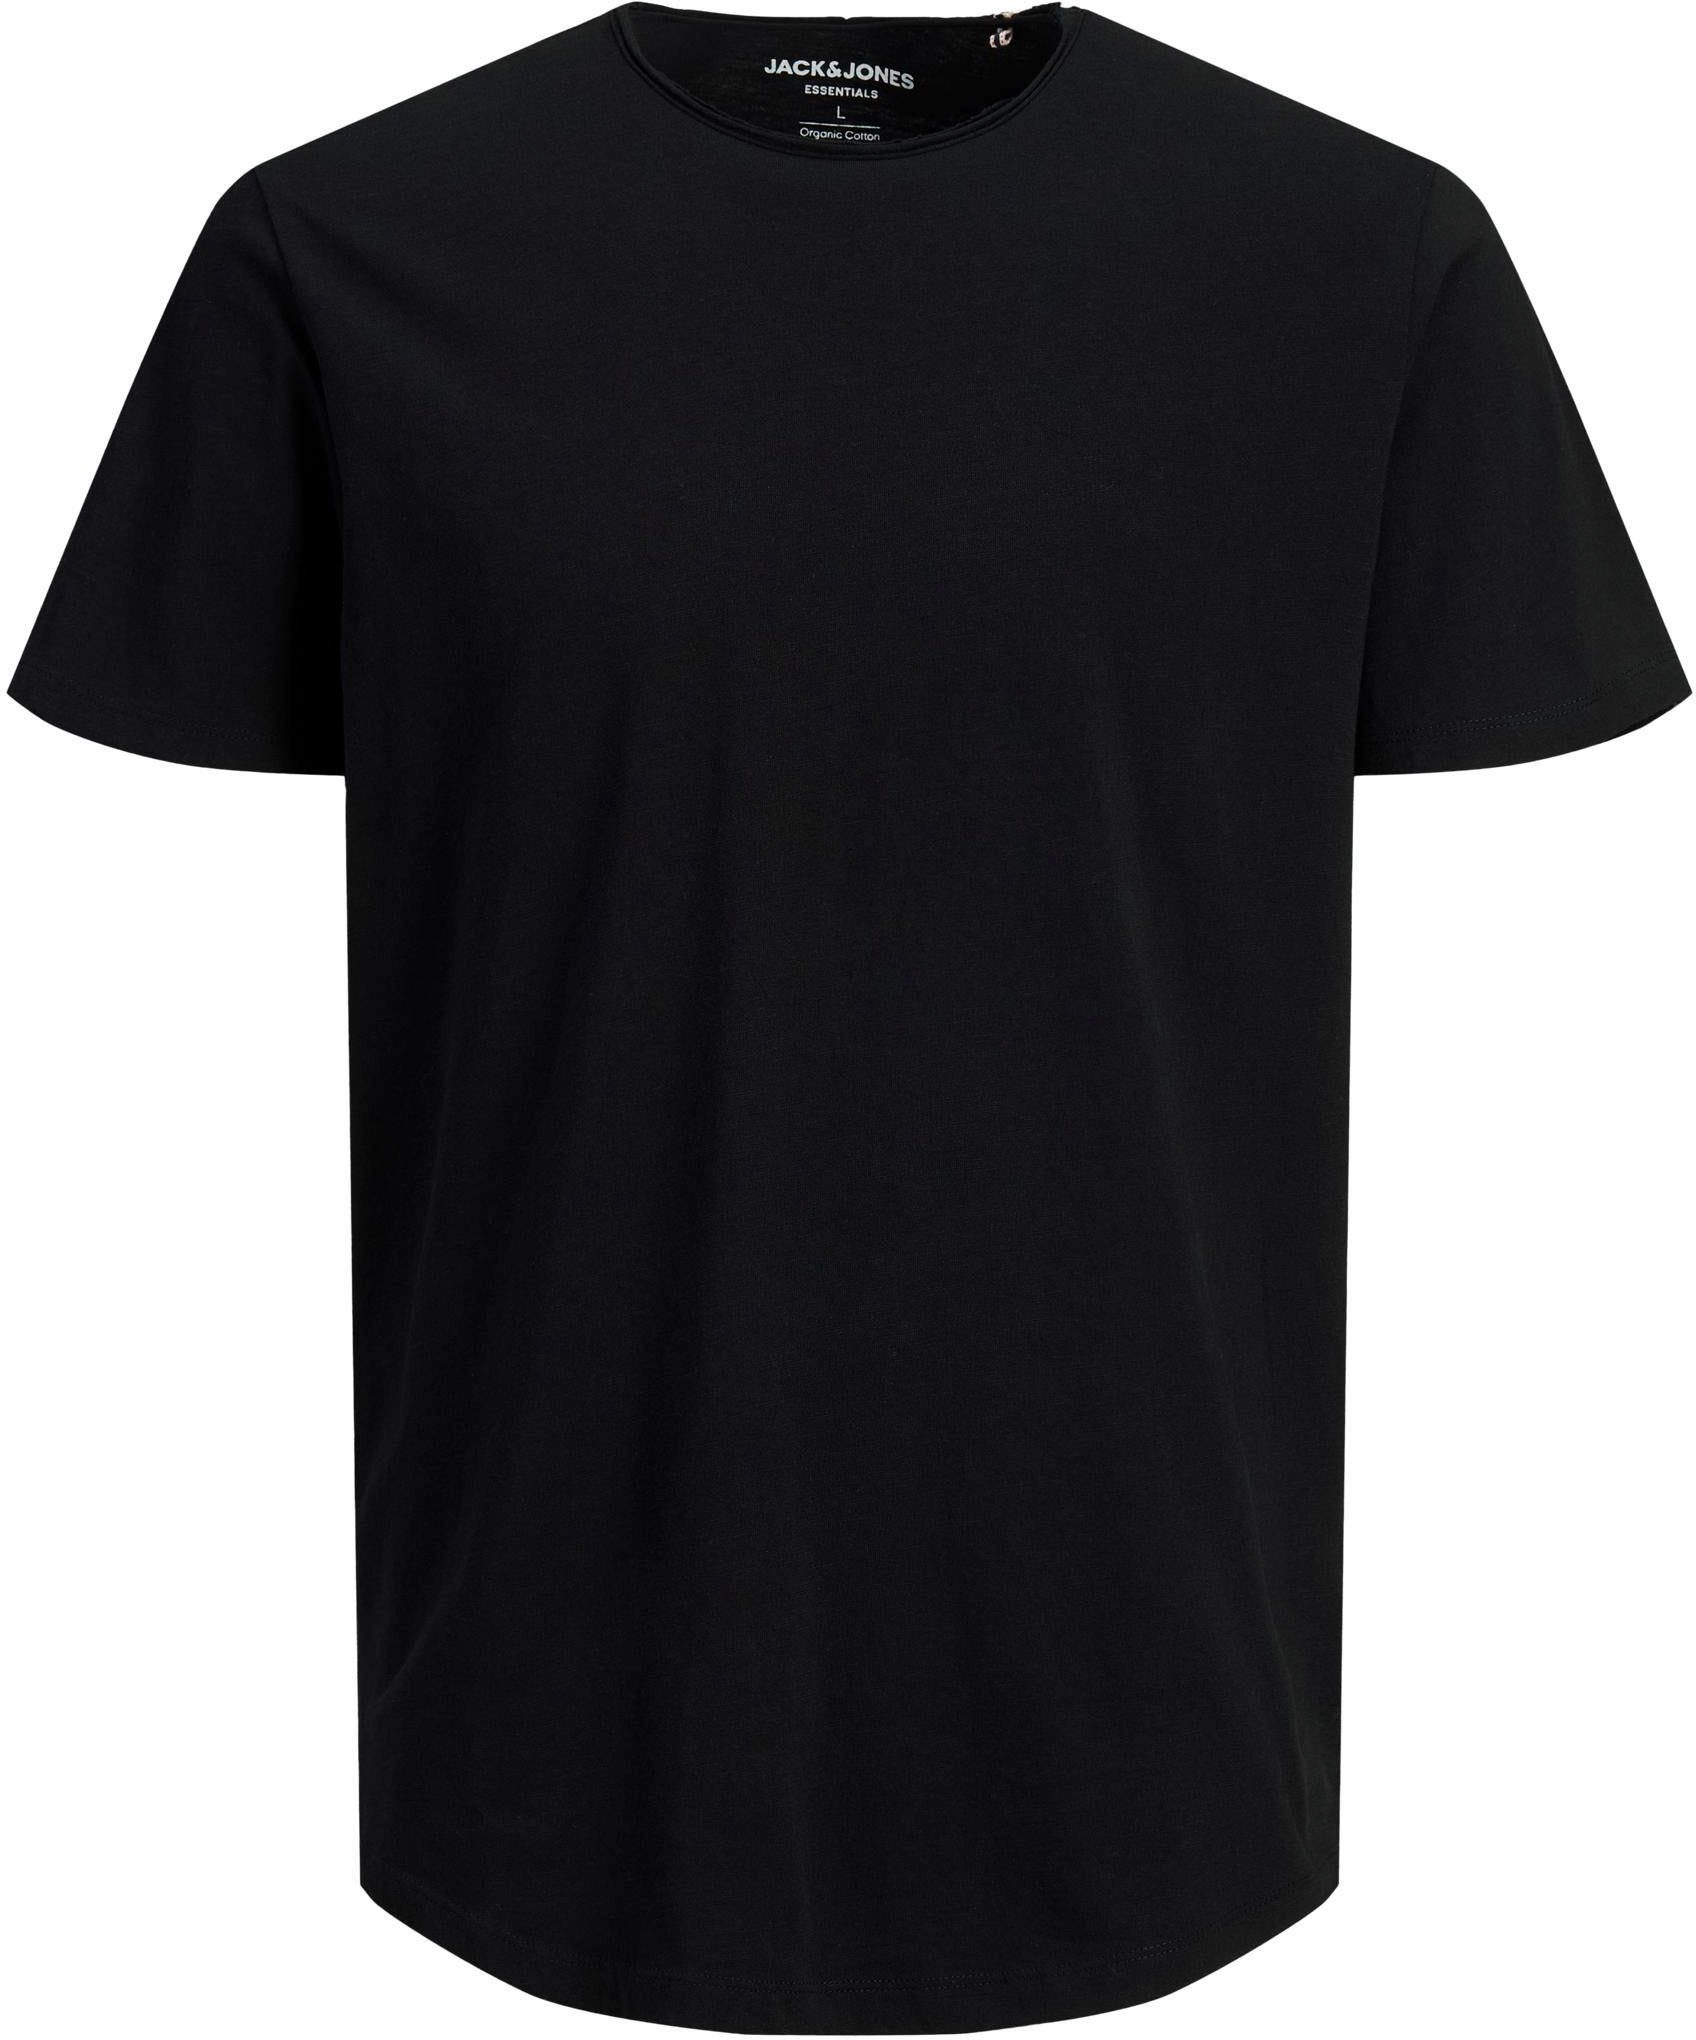 Jones T-Shirt & Black BASHER Jack TEE